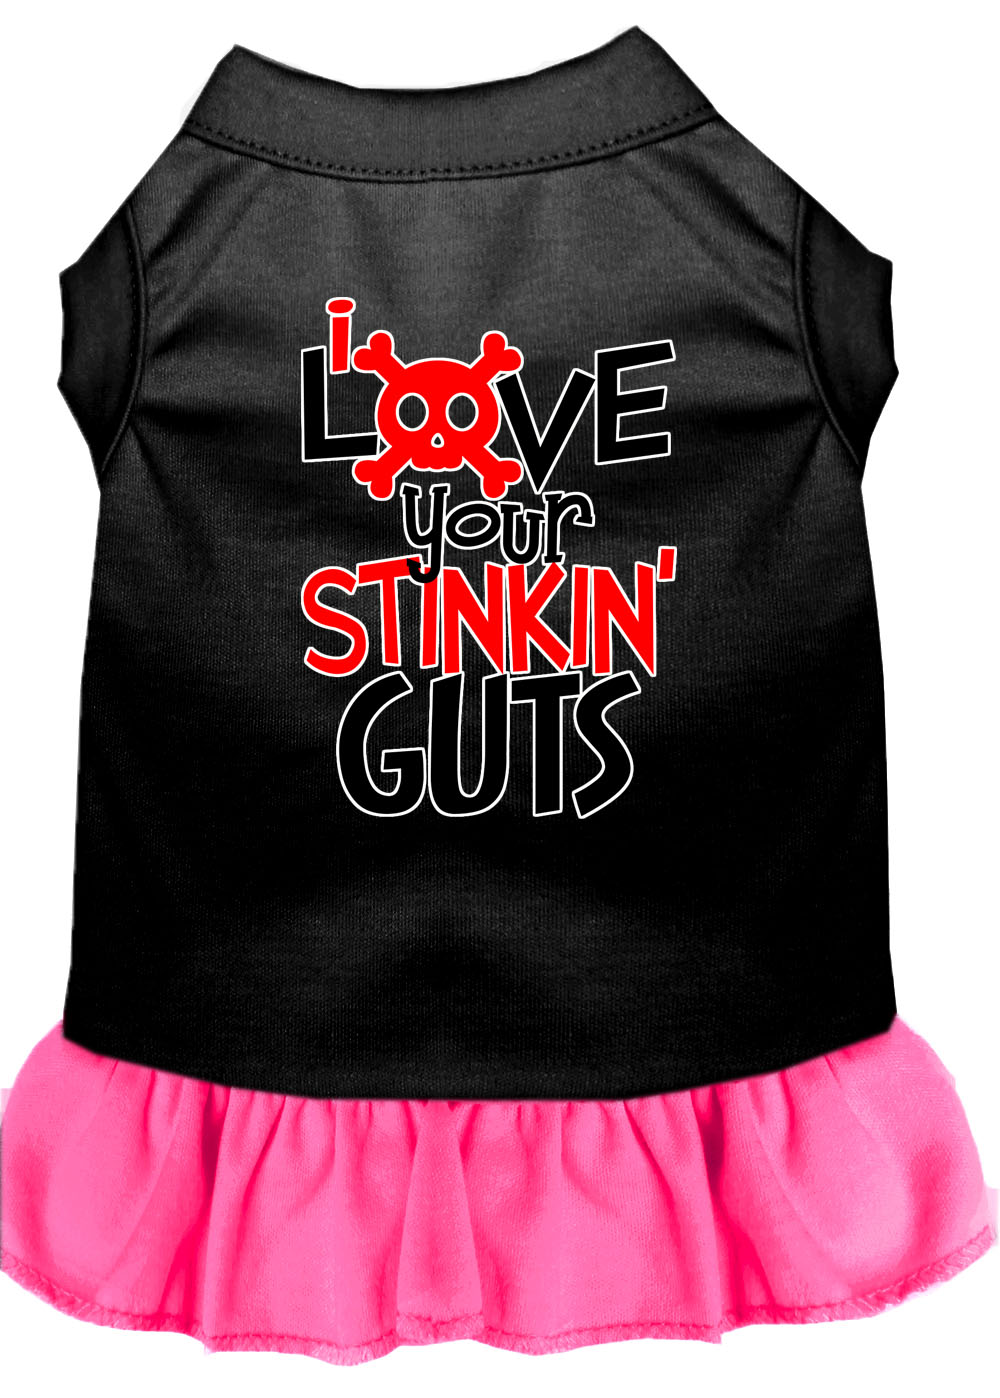 Love your Stinkin Guts Screen Print Dog Dress Black with Bright Pink Lg